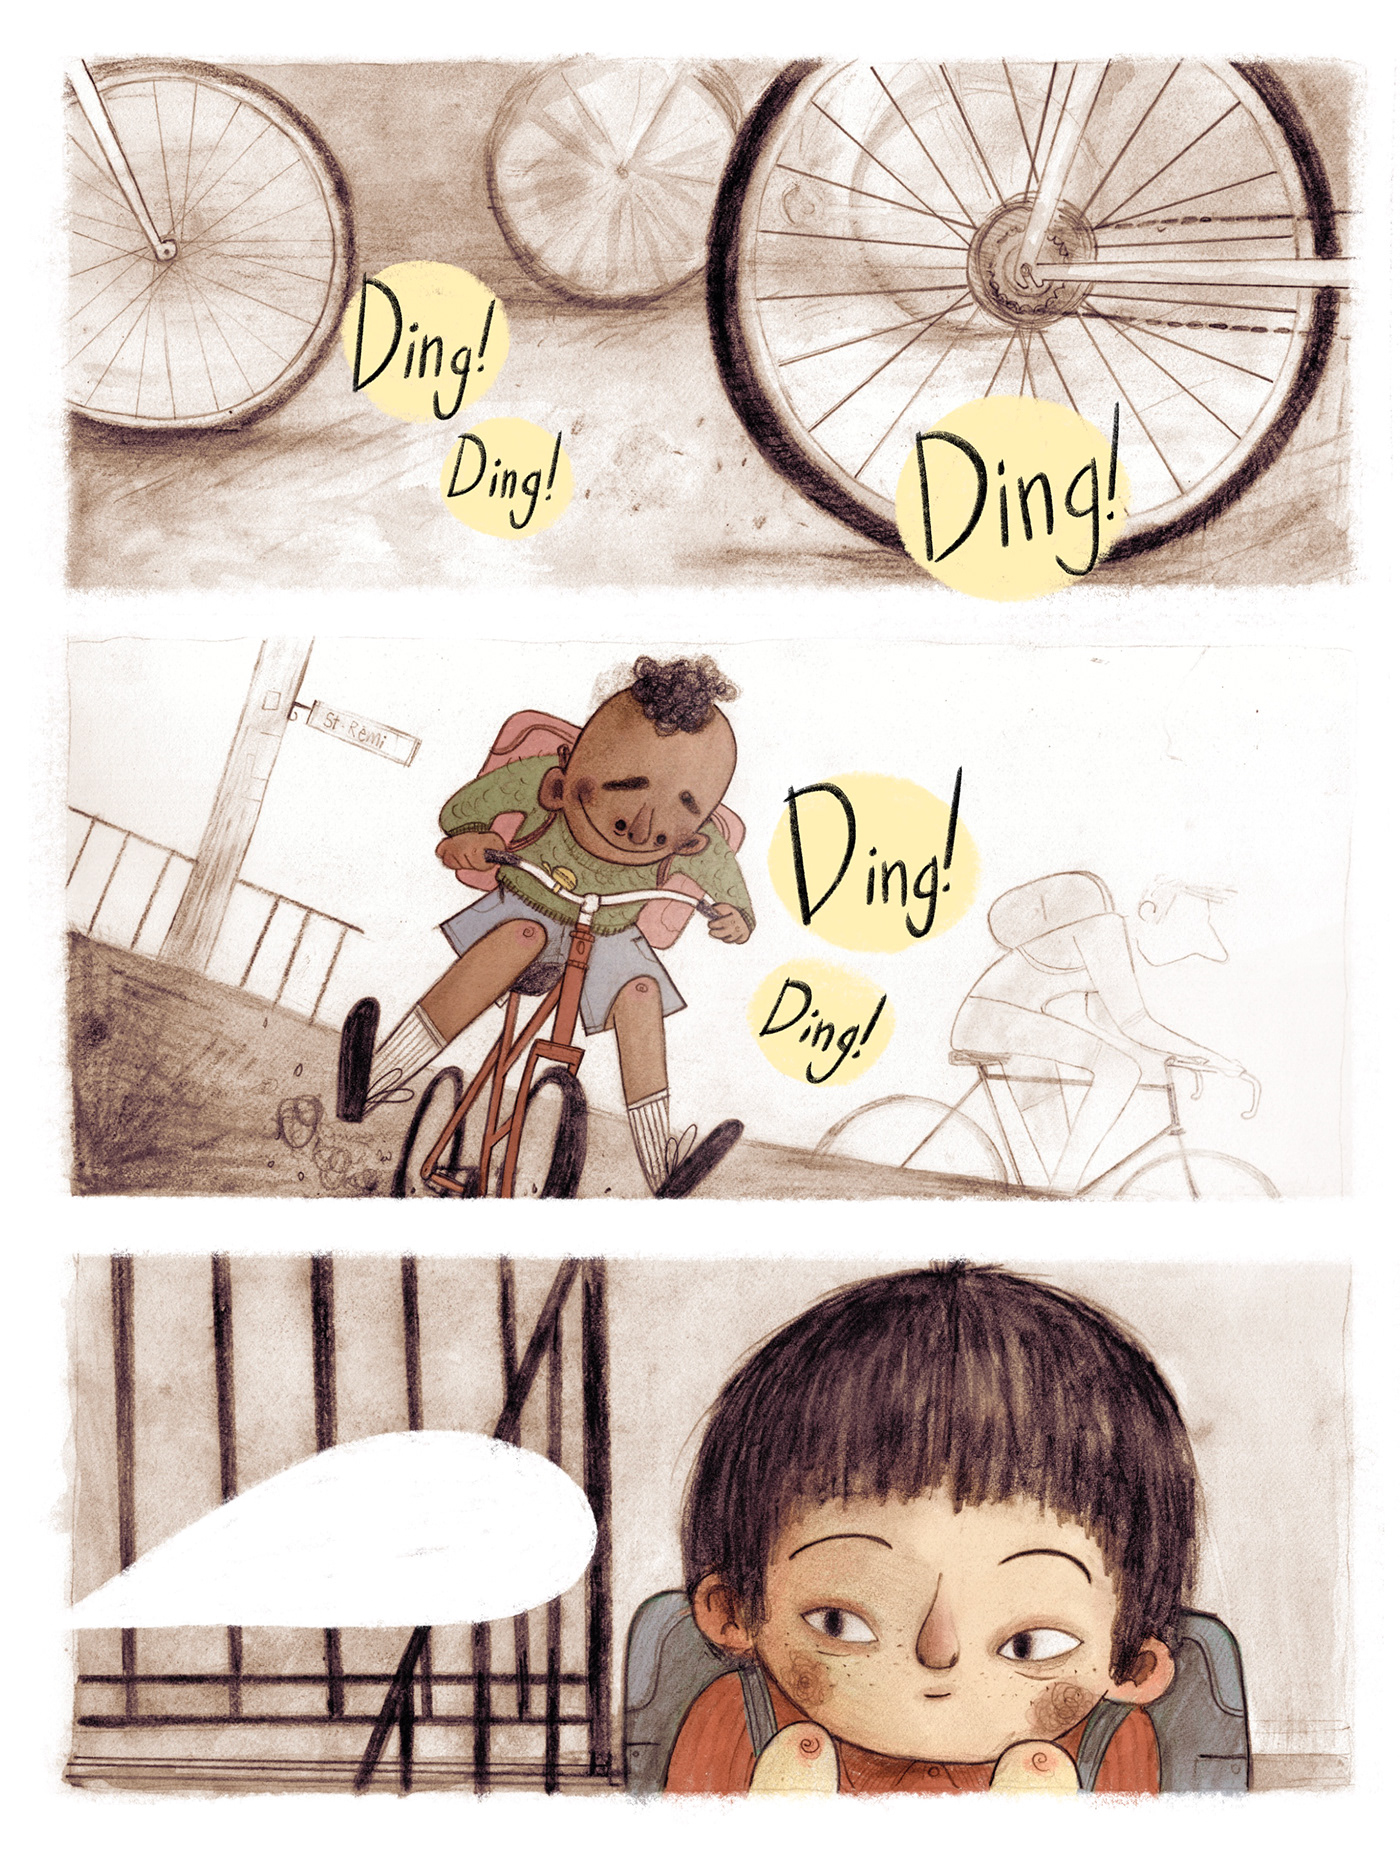 Bicycle kidlit children's illustration Picture book artwork